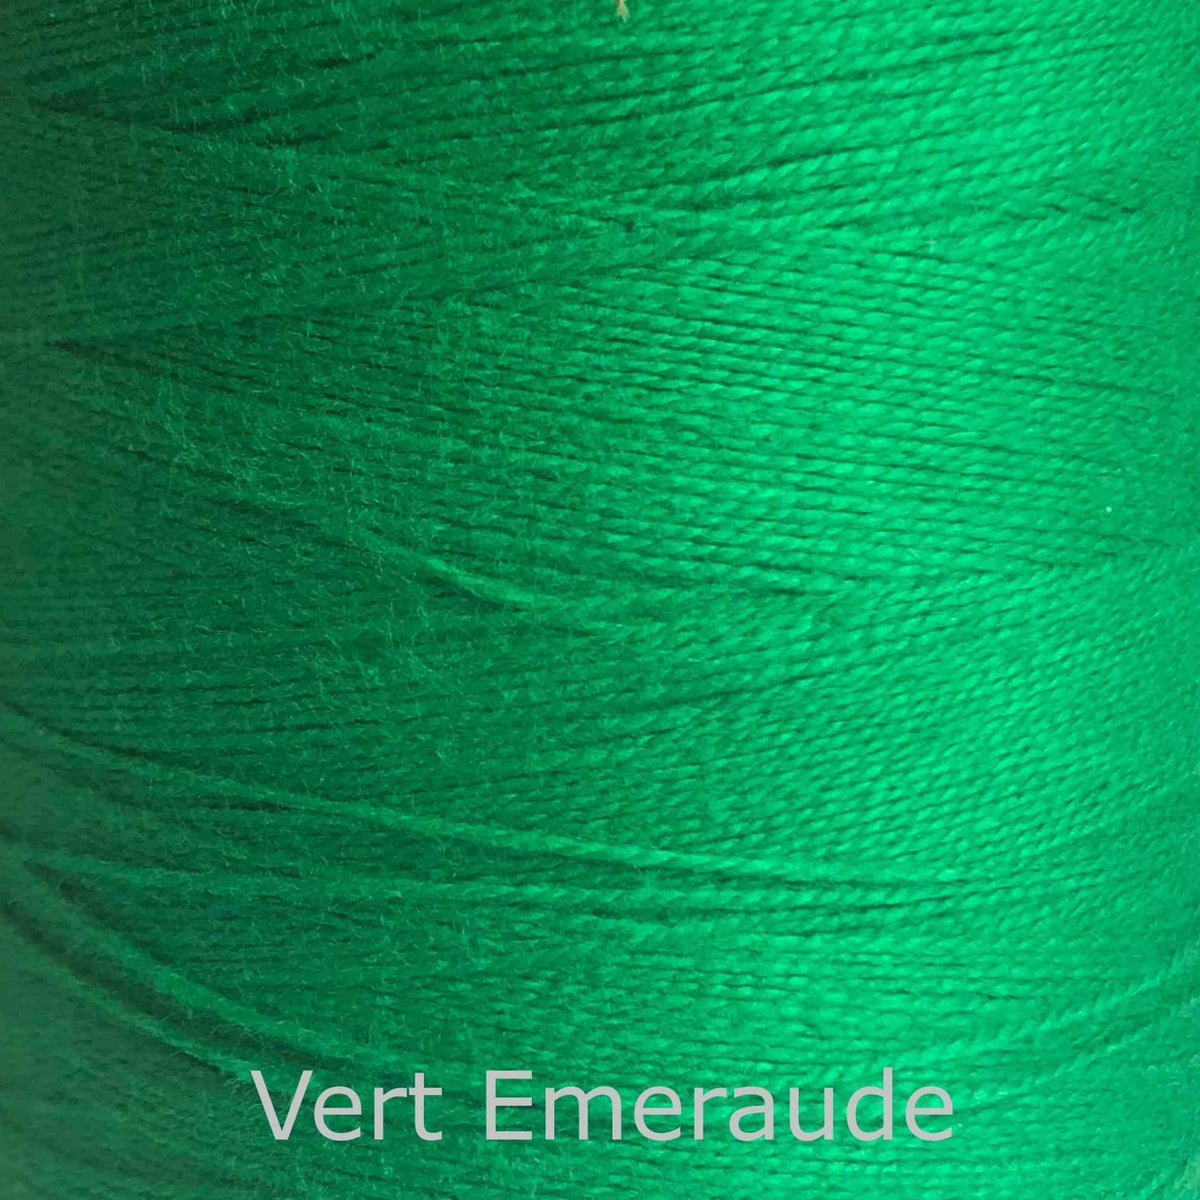 Maurice Brassard Boucle Cotton Vert Emeraude